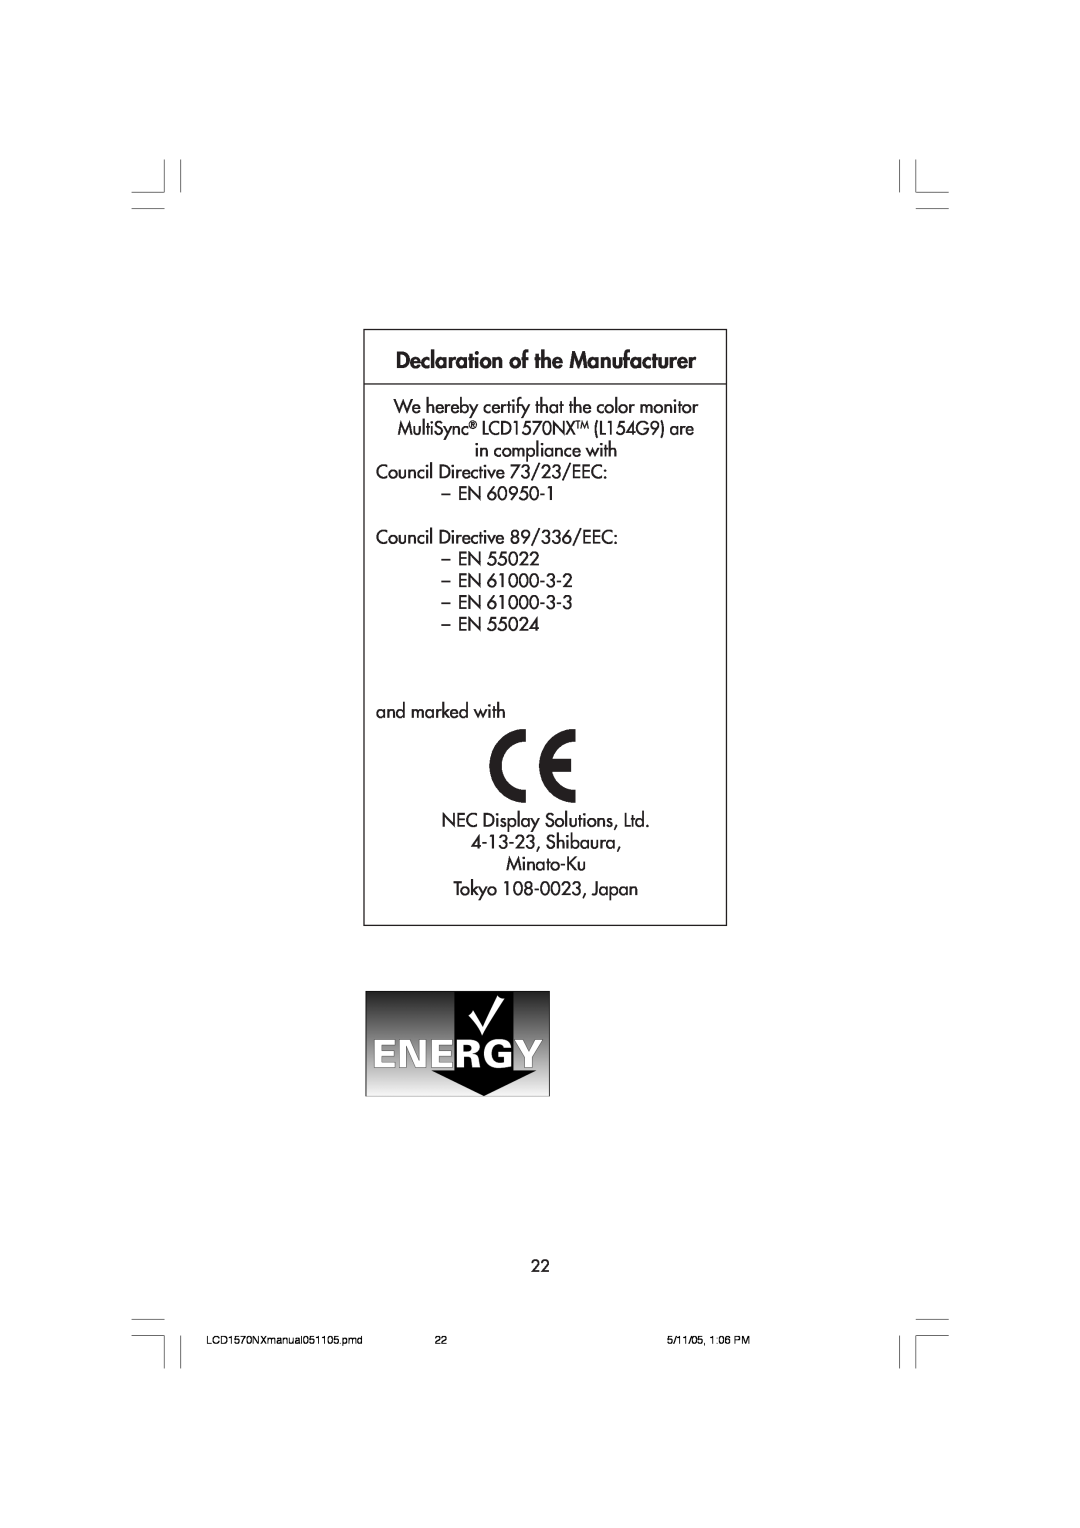 NEC LCD1570NX Declaration of the Manufacturer, Council Directive 73/23/EEC EN Council Directive 89/336/EEC EN EN EN 